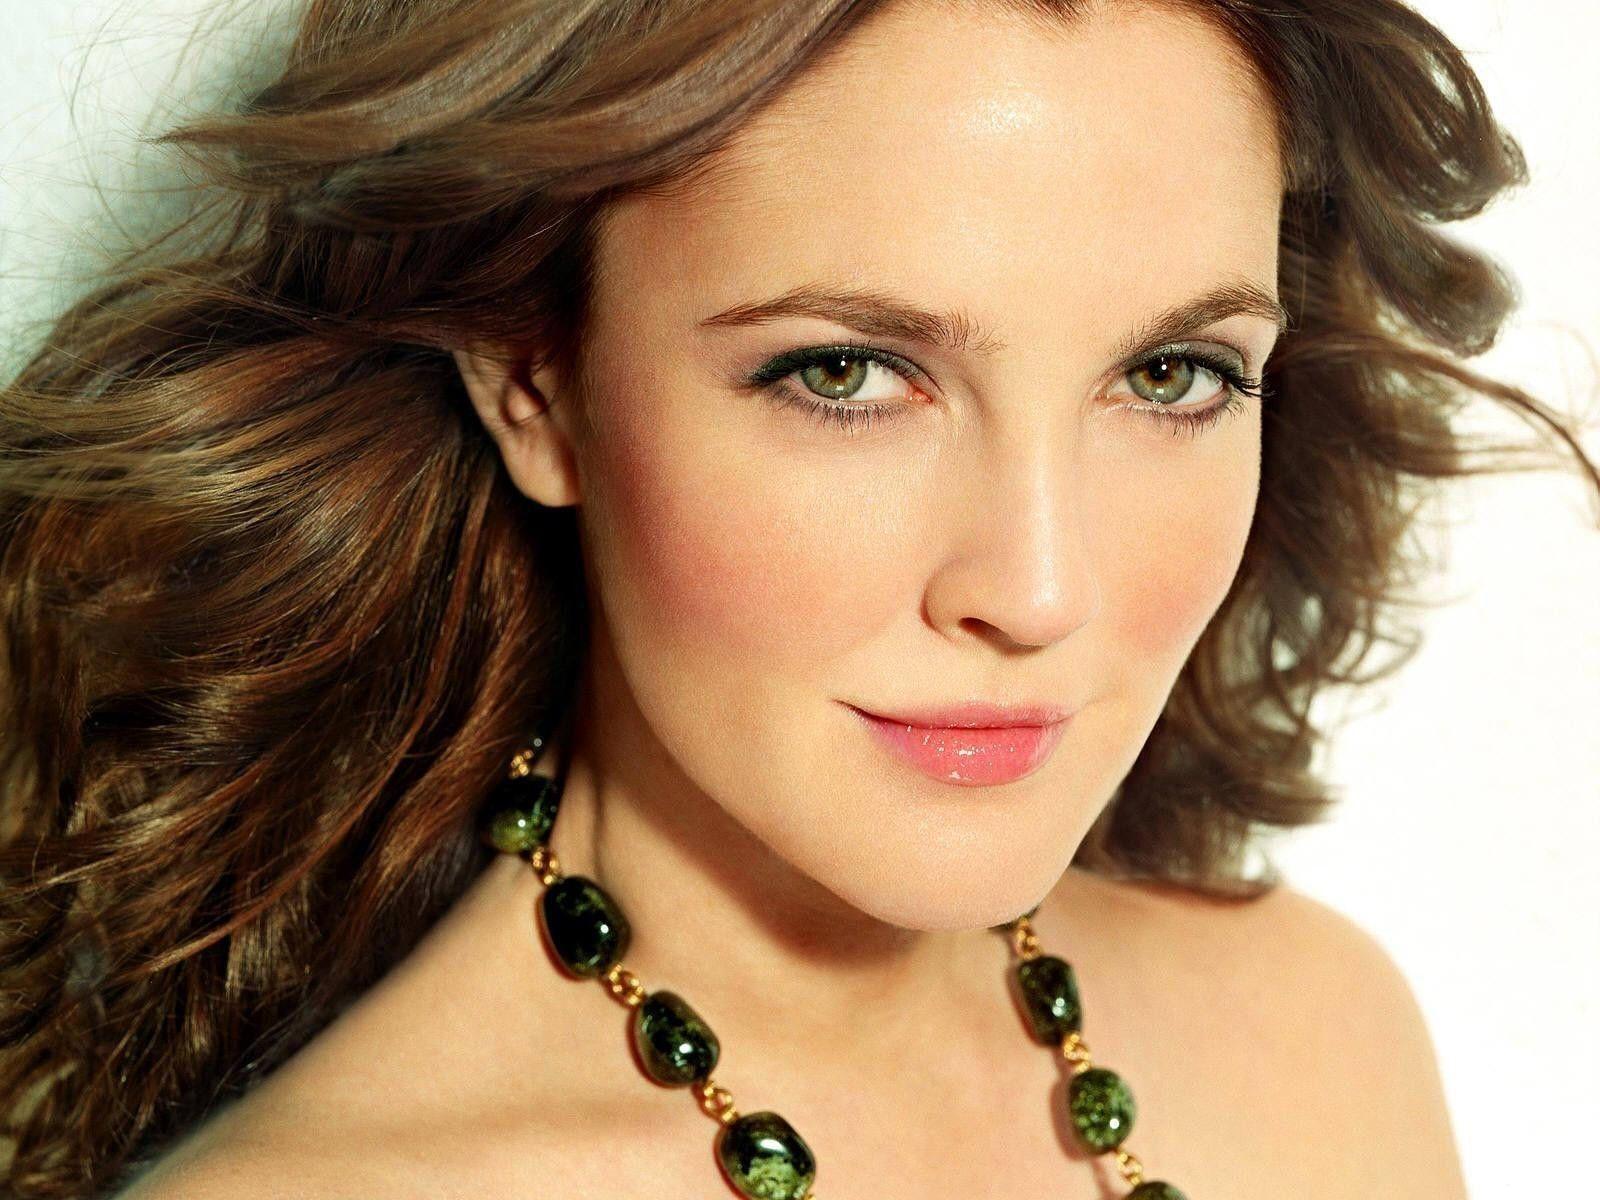 Drew Barrymore Wallpaper. Free Download HD Beautiful Actress Image